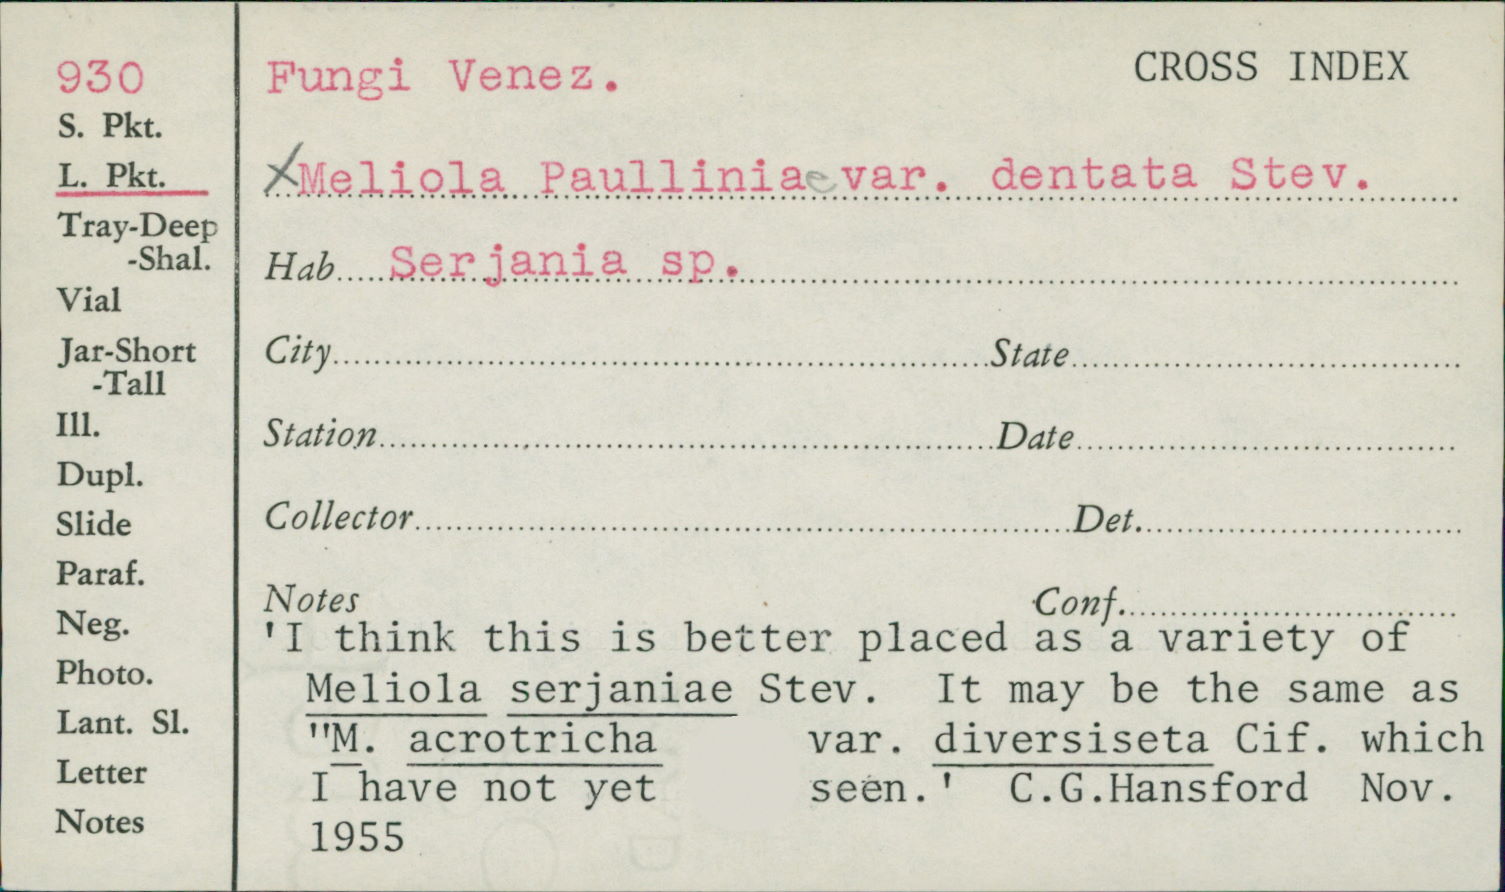 Meliola paulliniae var. dentata image